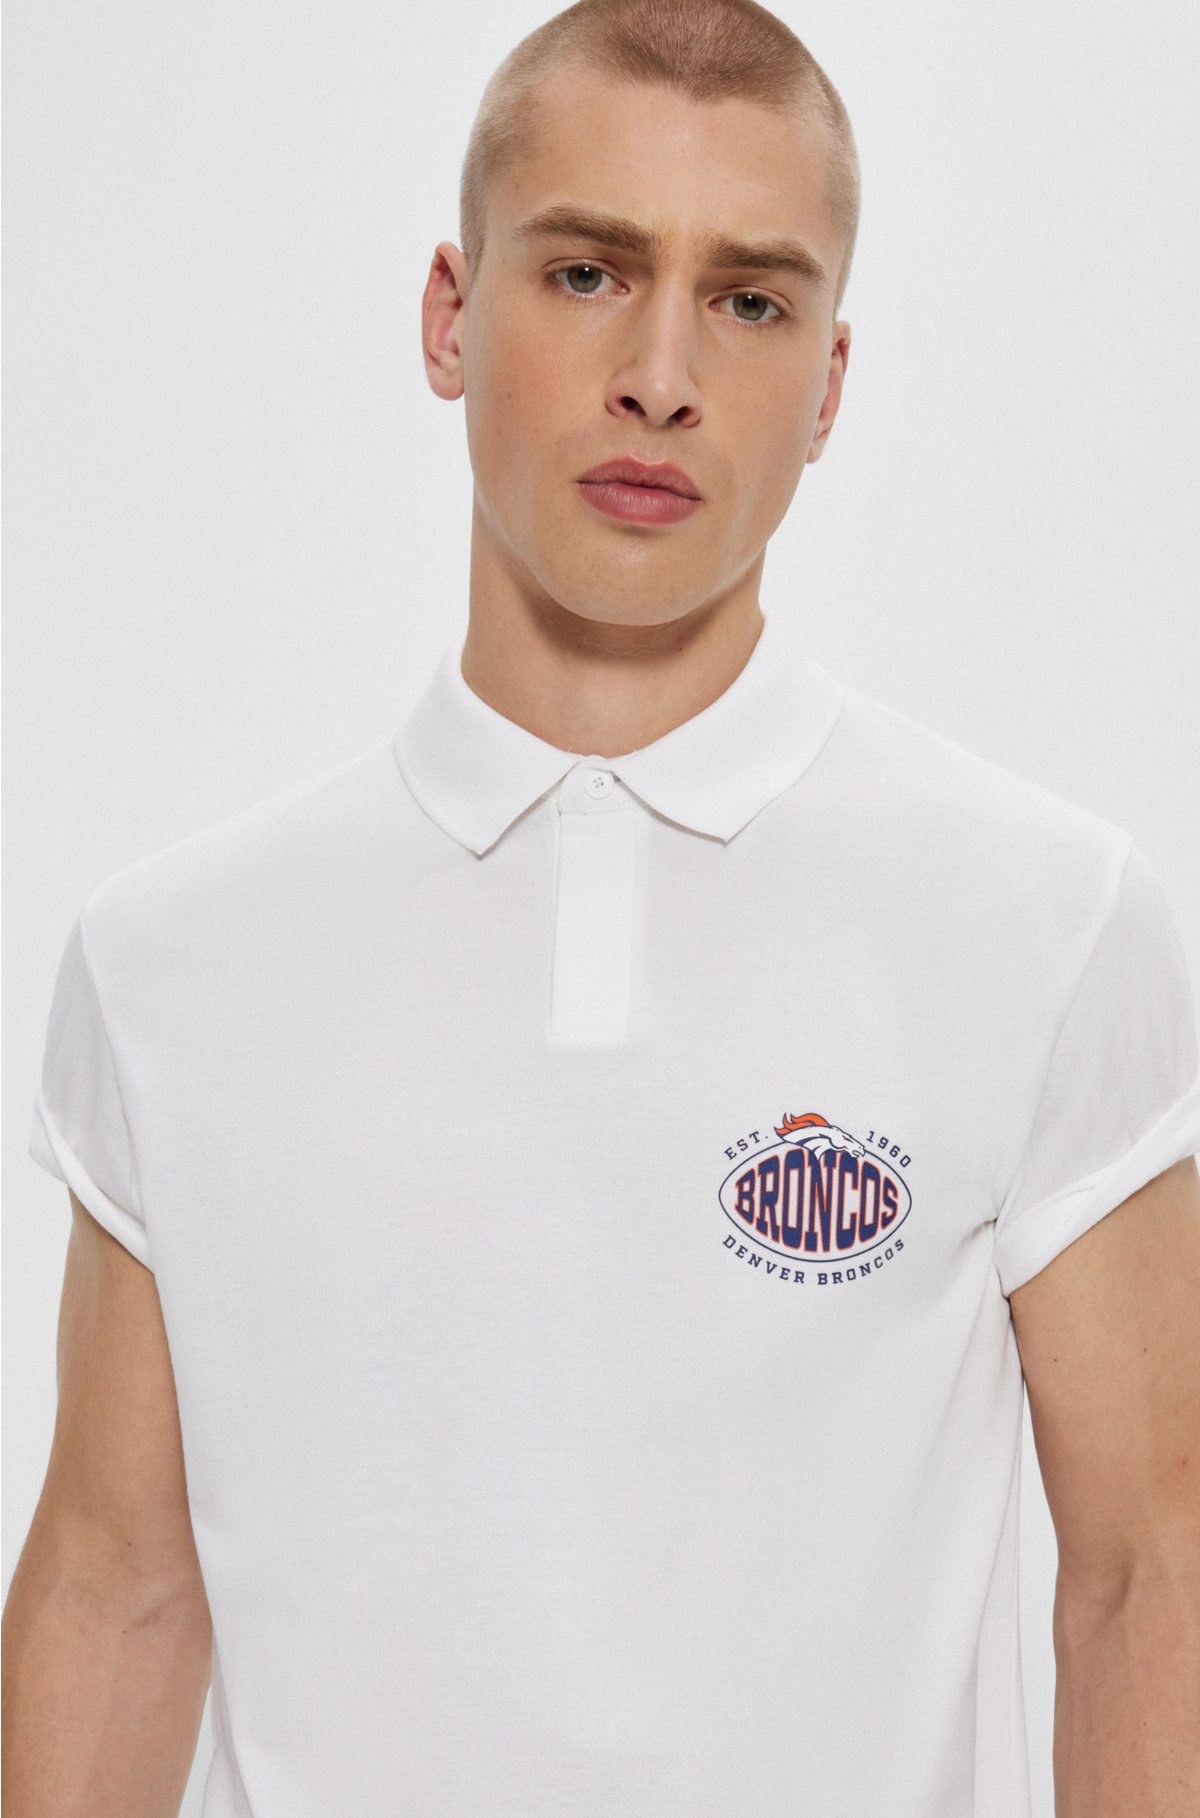 BOSS x NFL cotton-piqué polo shirt with collaborative branding, Broncos